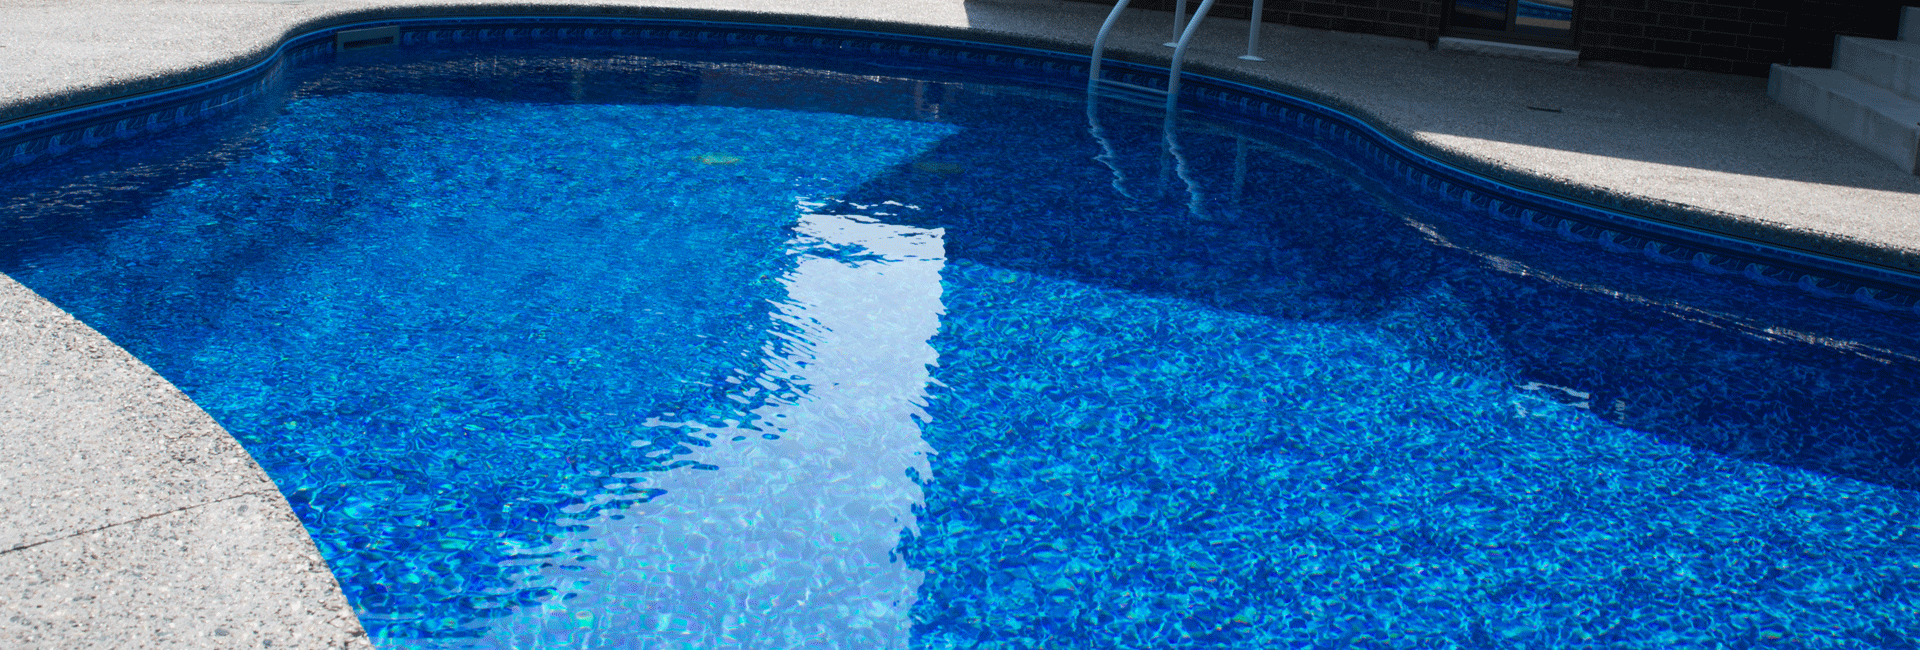 large rectangular swimming pool in backyard with beautiful background